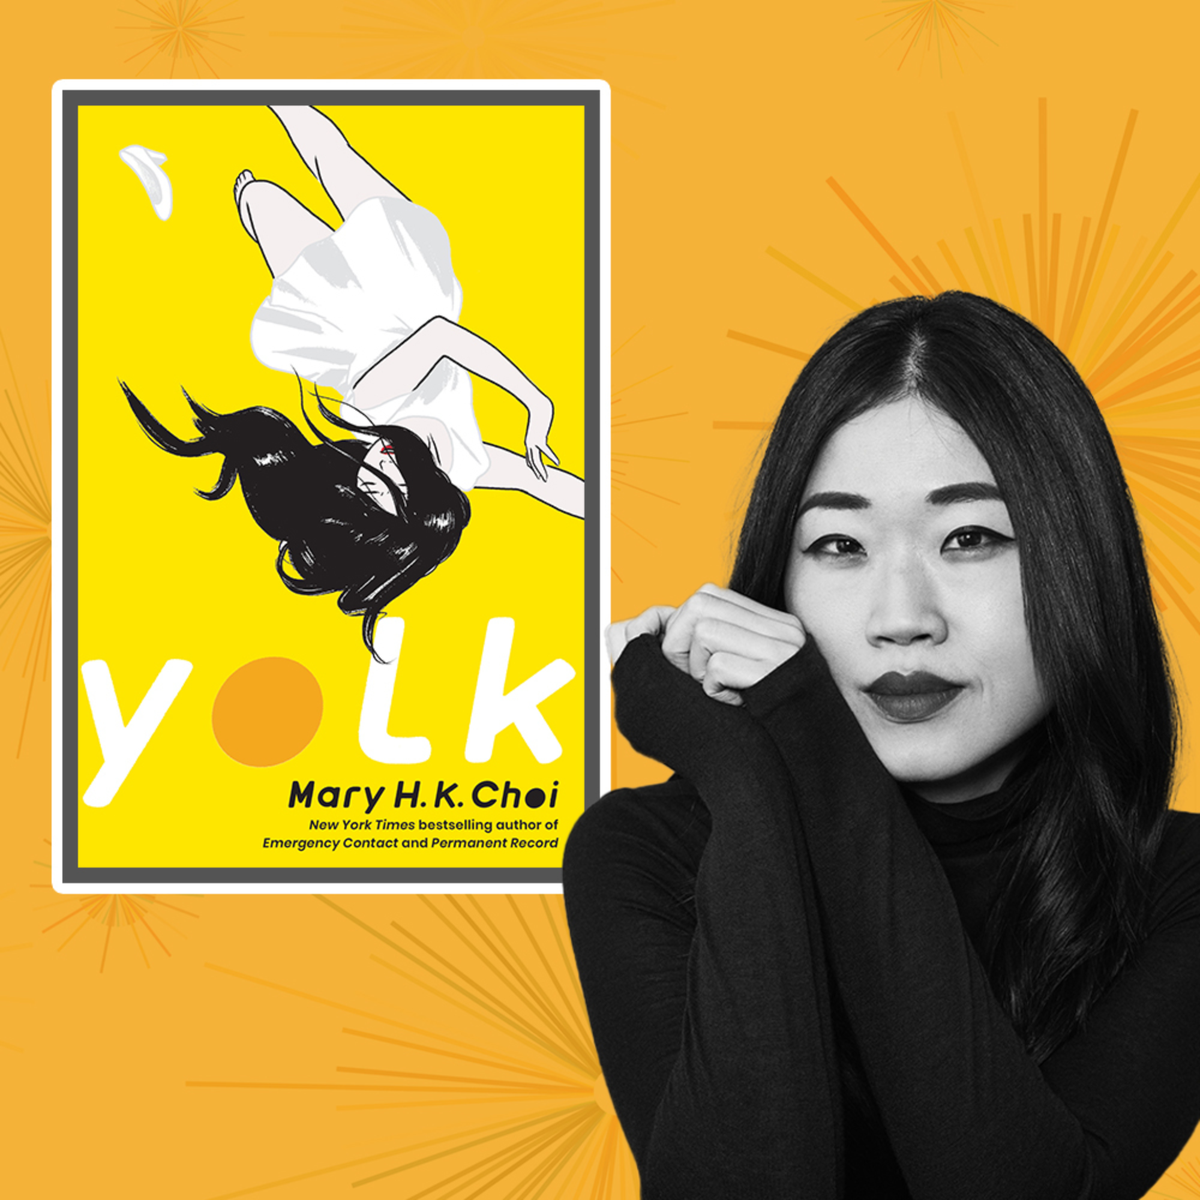 author mary hk choi author of "yolk"